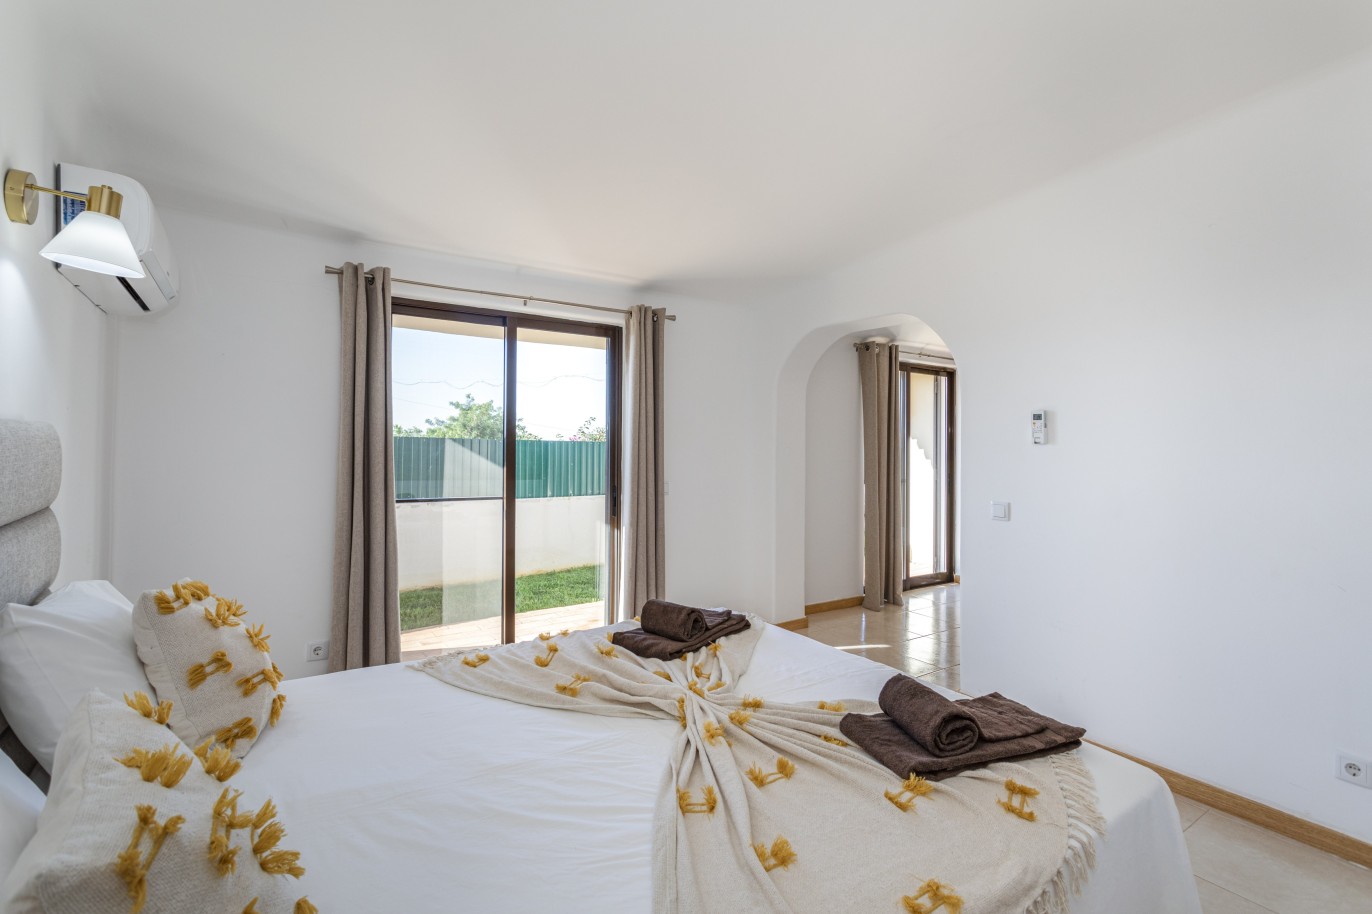 4 bedroom villa with pool, for sale in Albufeira, Algarve_233596